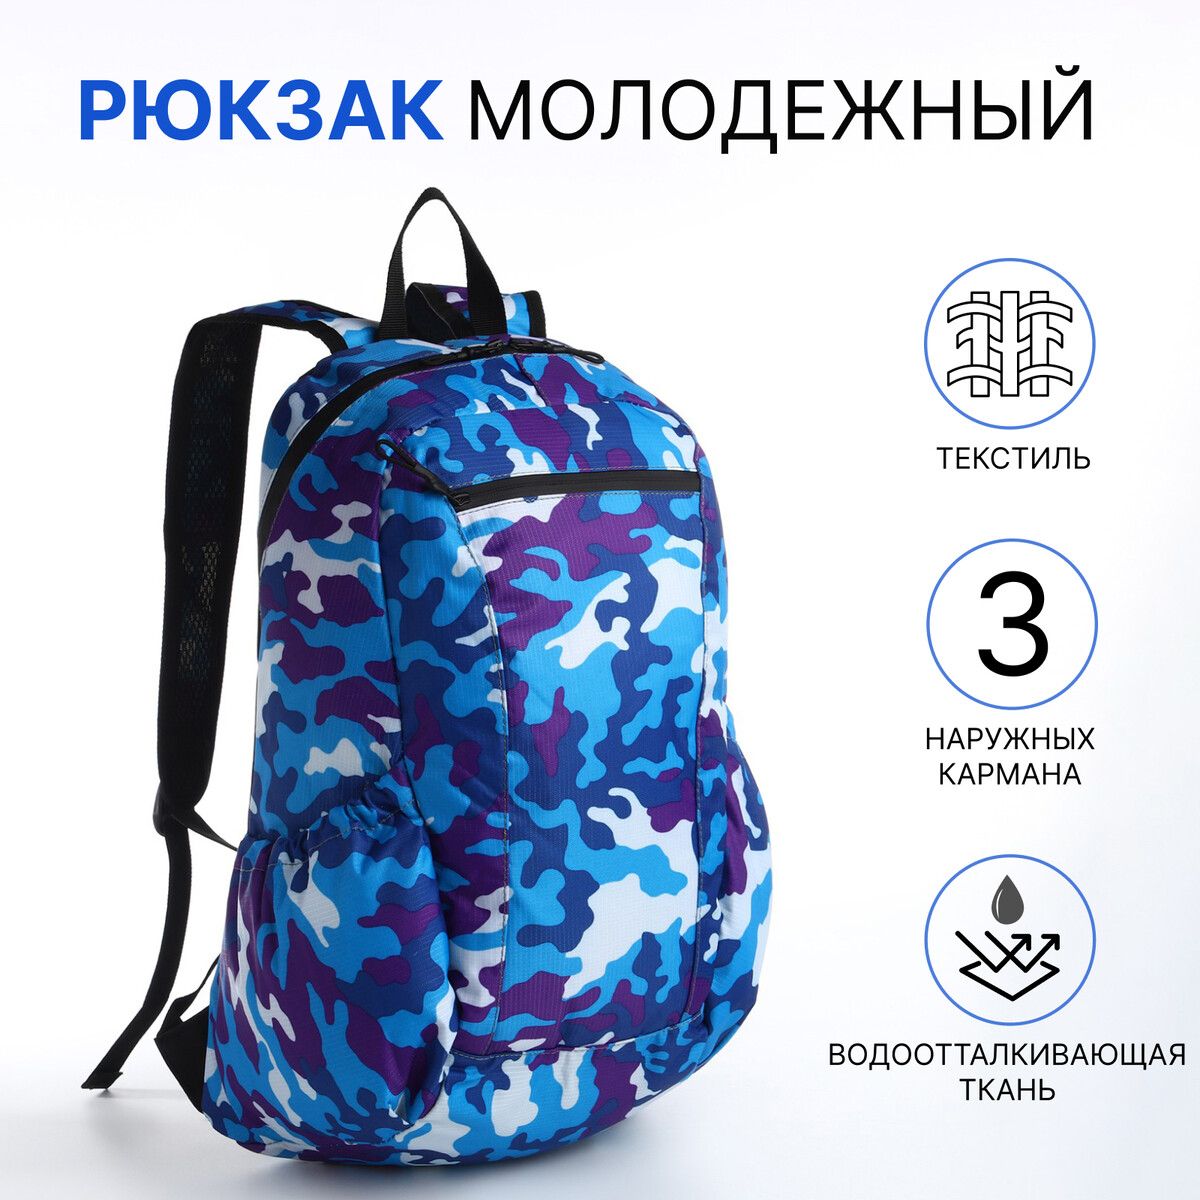 Рюкзак молодежный, водонепроницаемый на молнии, 3 кармана, цвет синий рюкзак bruno visconti молодежный синий copyleft арт 12 003 148 02